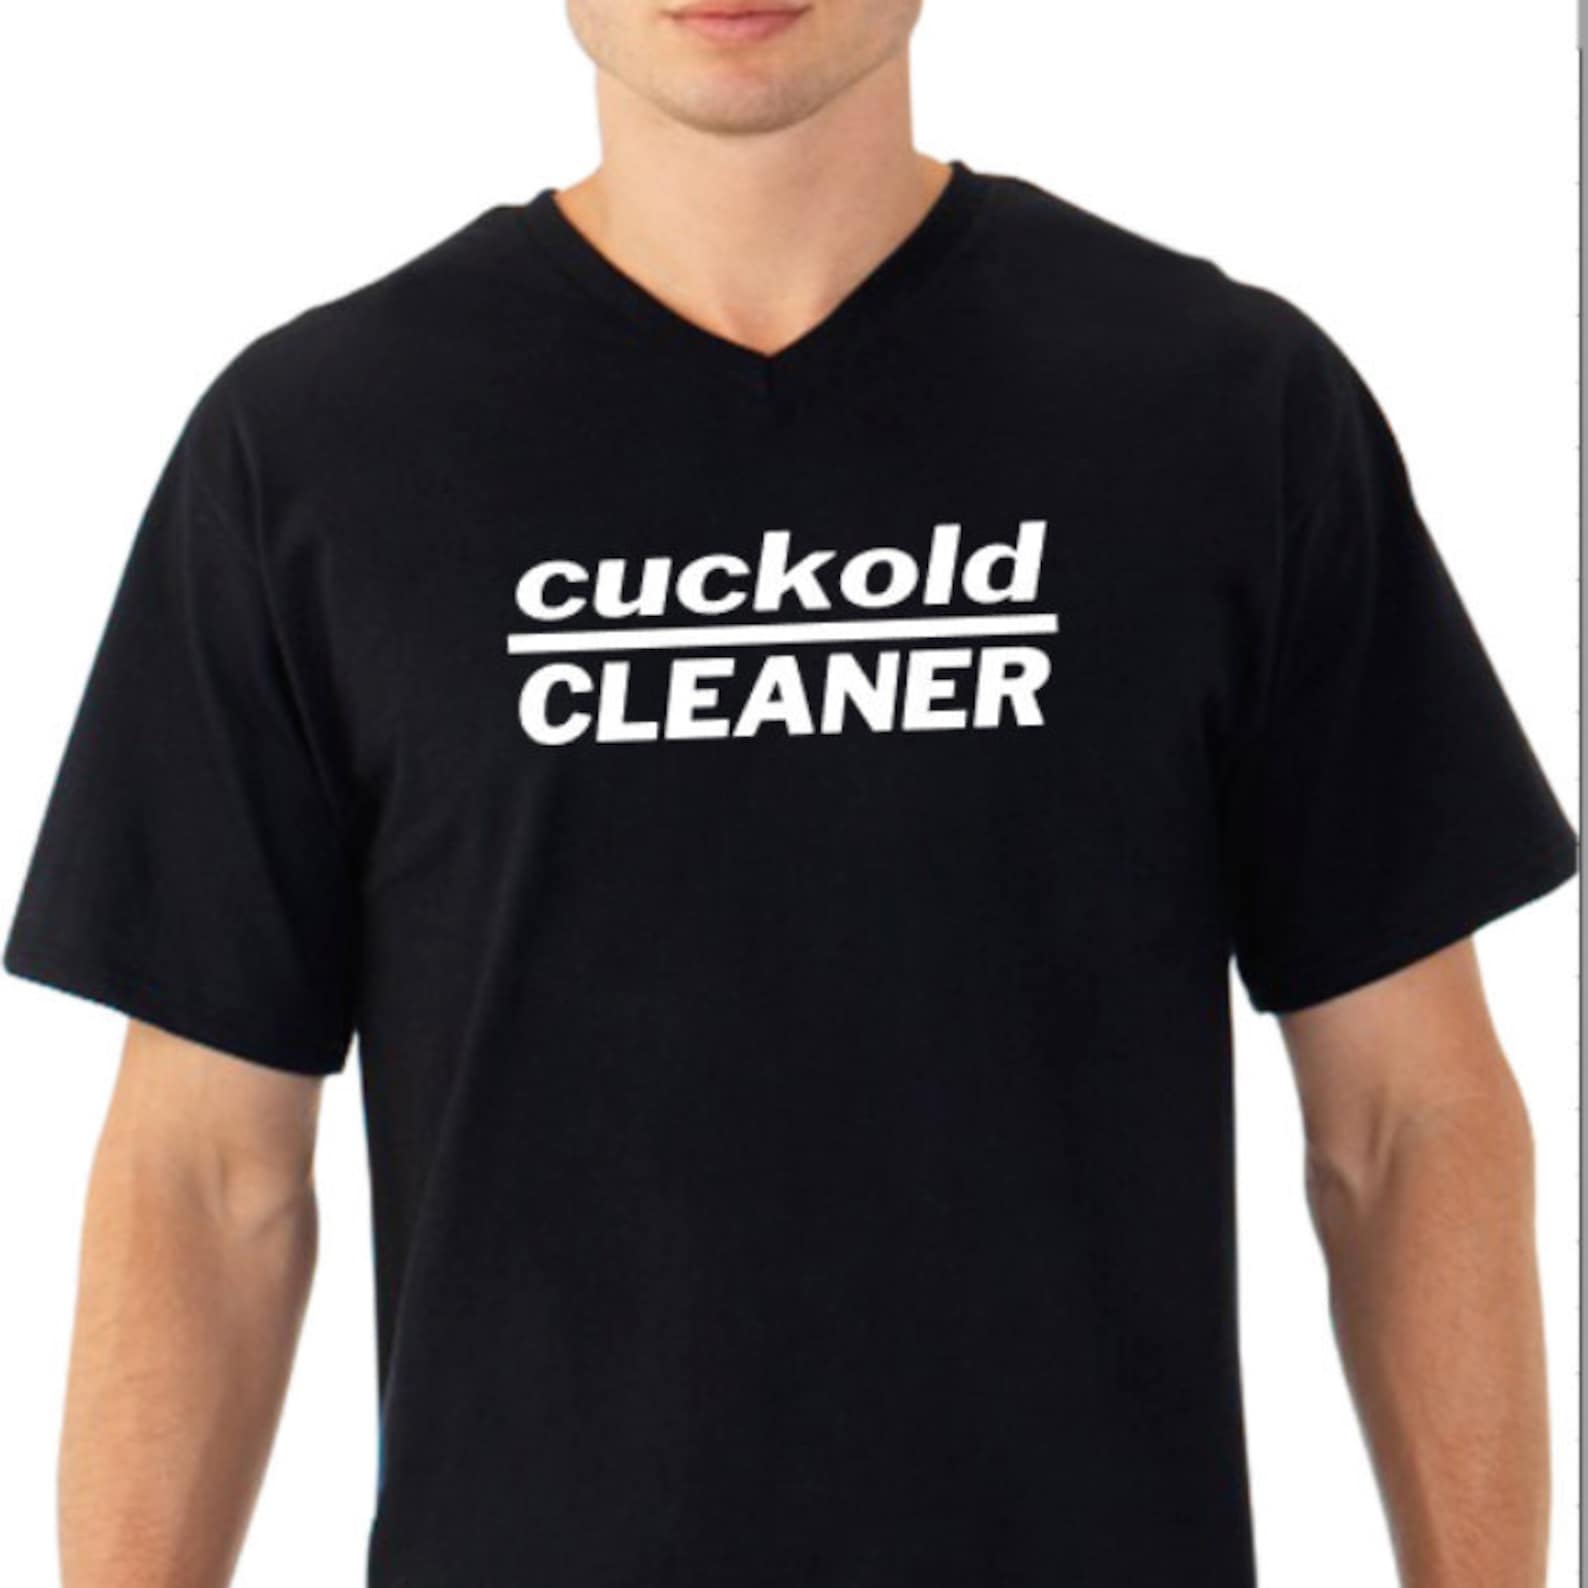 Cuckold Cleaner